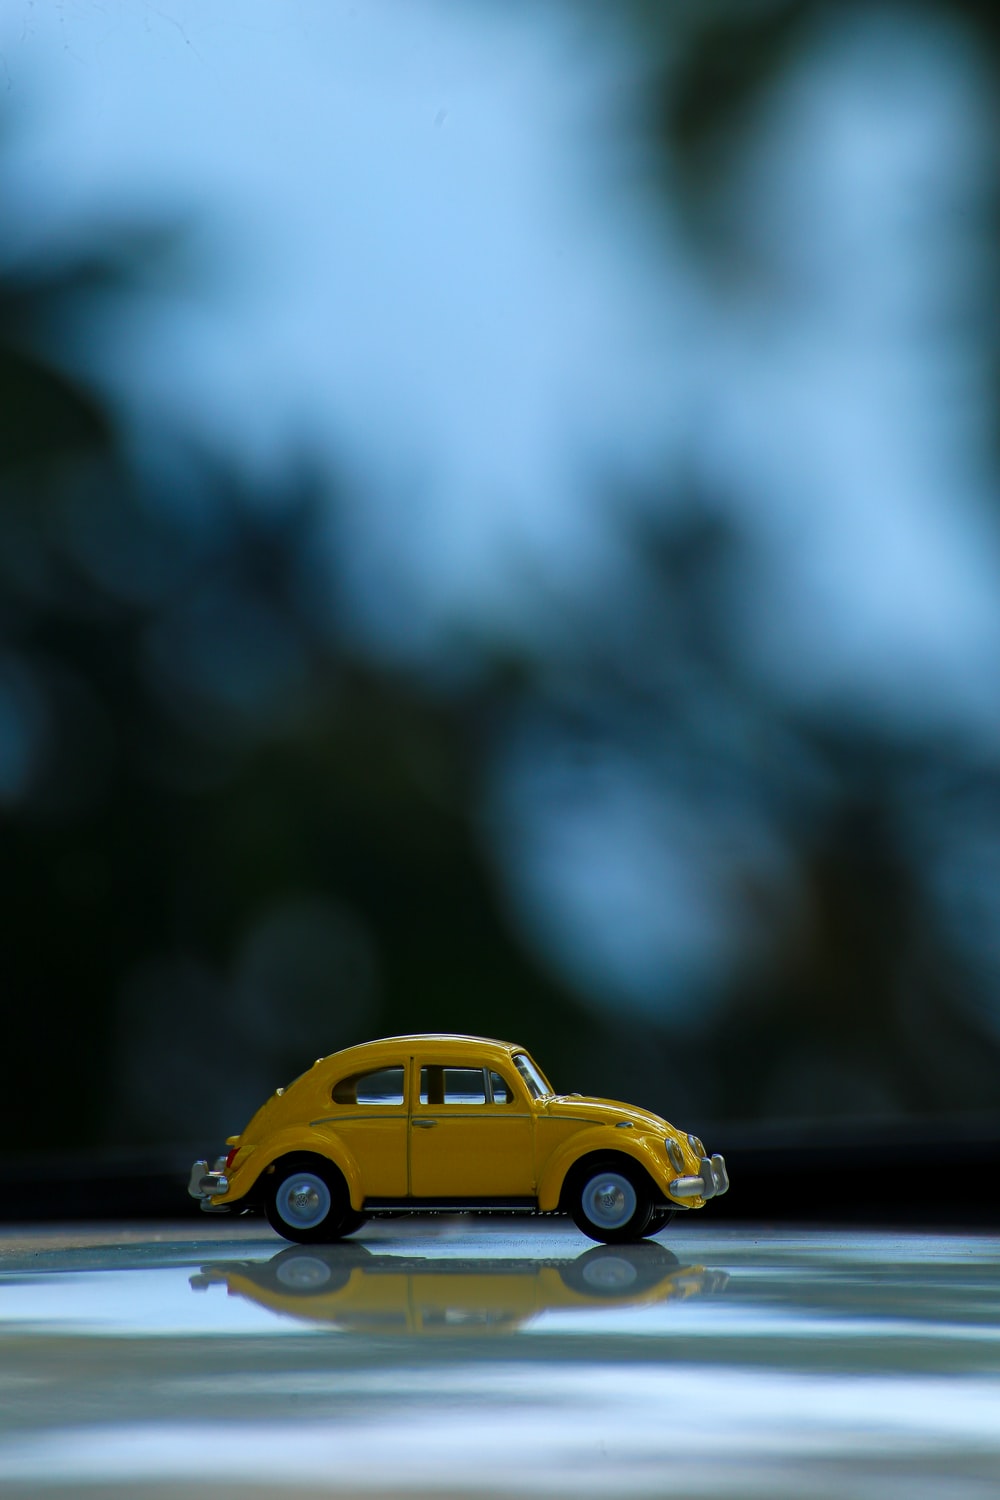 Mini Car Picture. Download Free Image